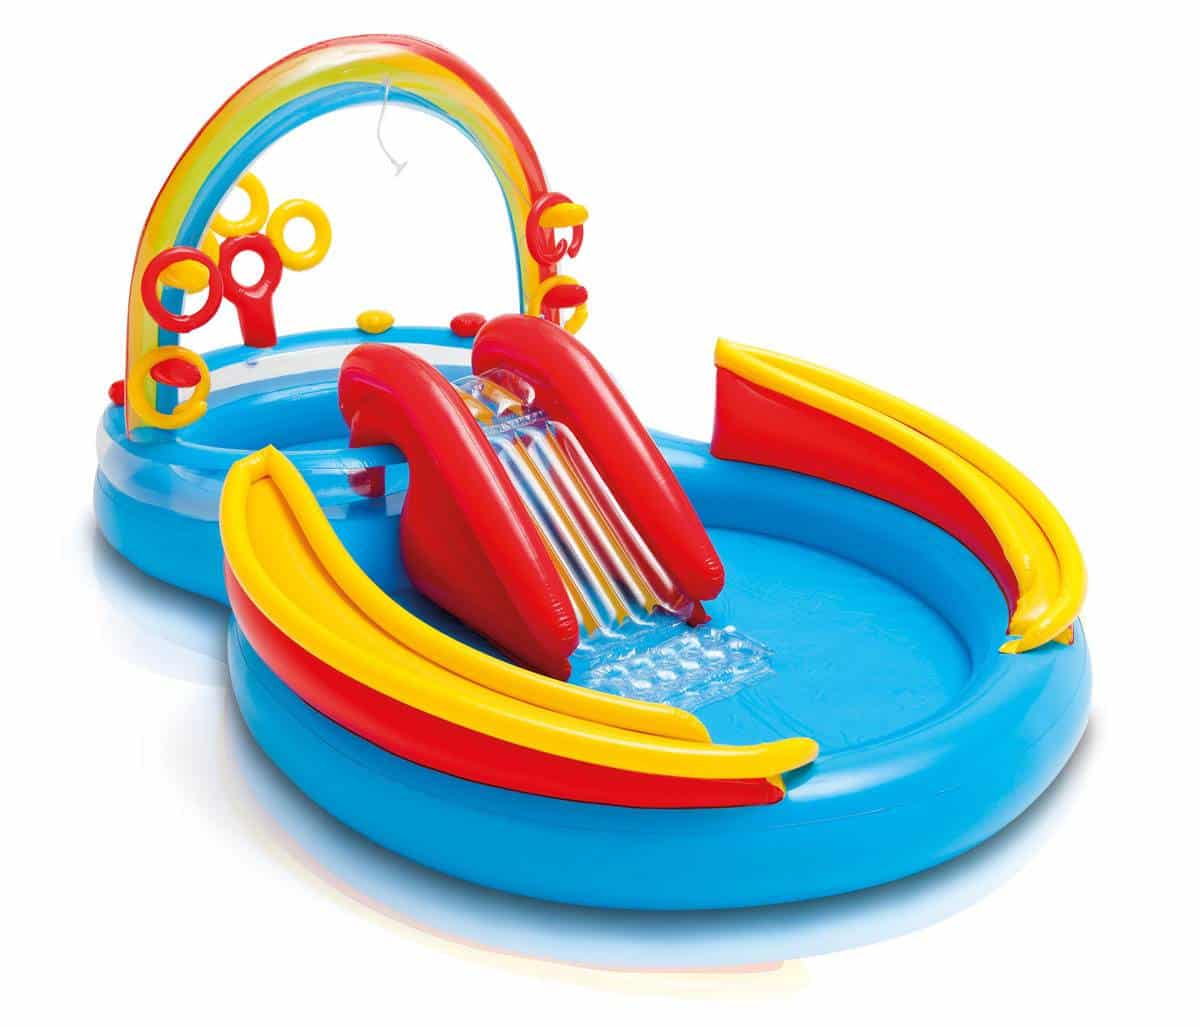 Intex Rainbow Slide Kids Play Inflatable Pool Ring Center